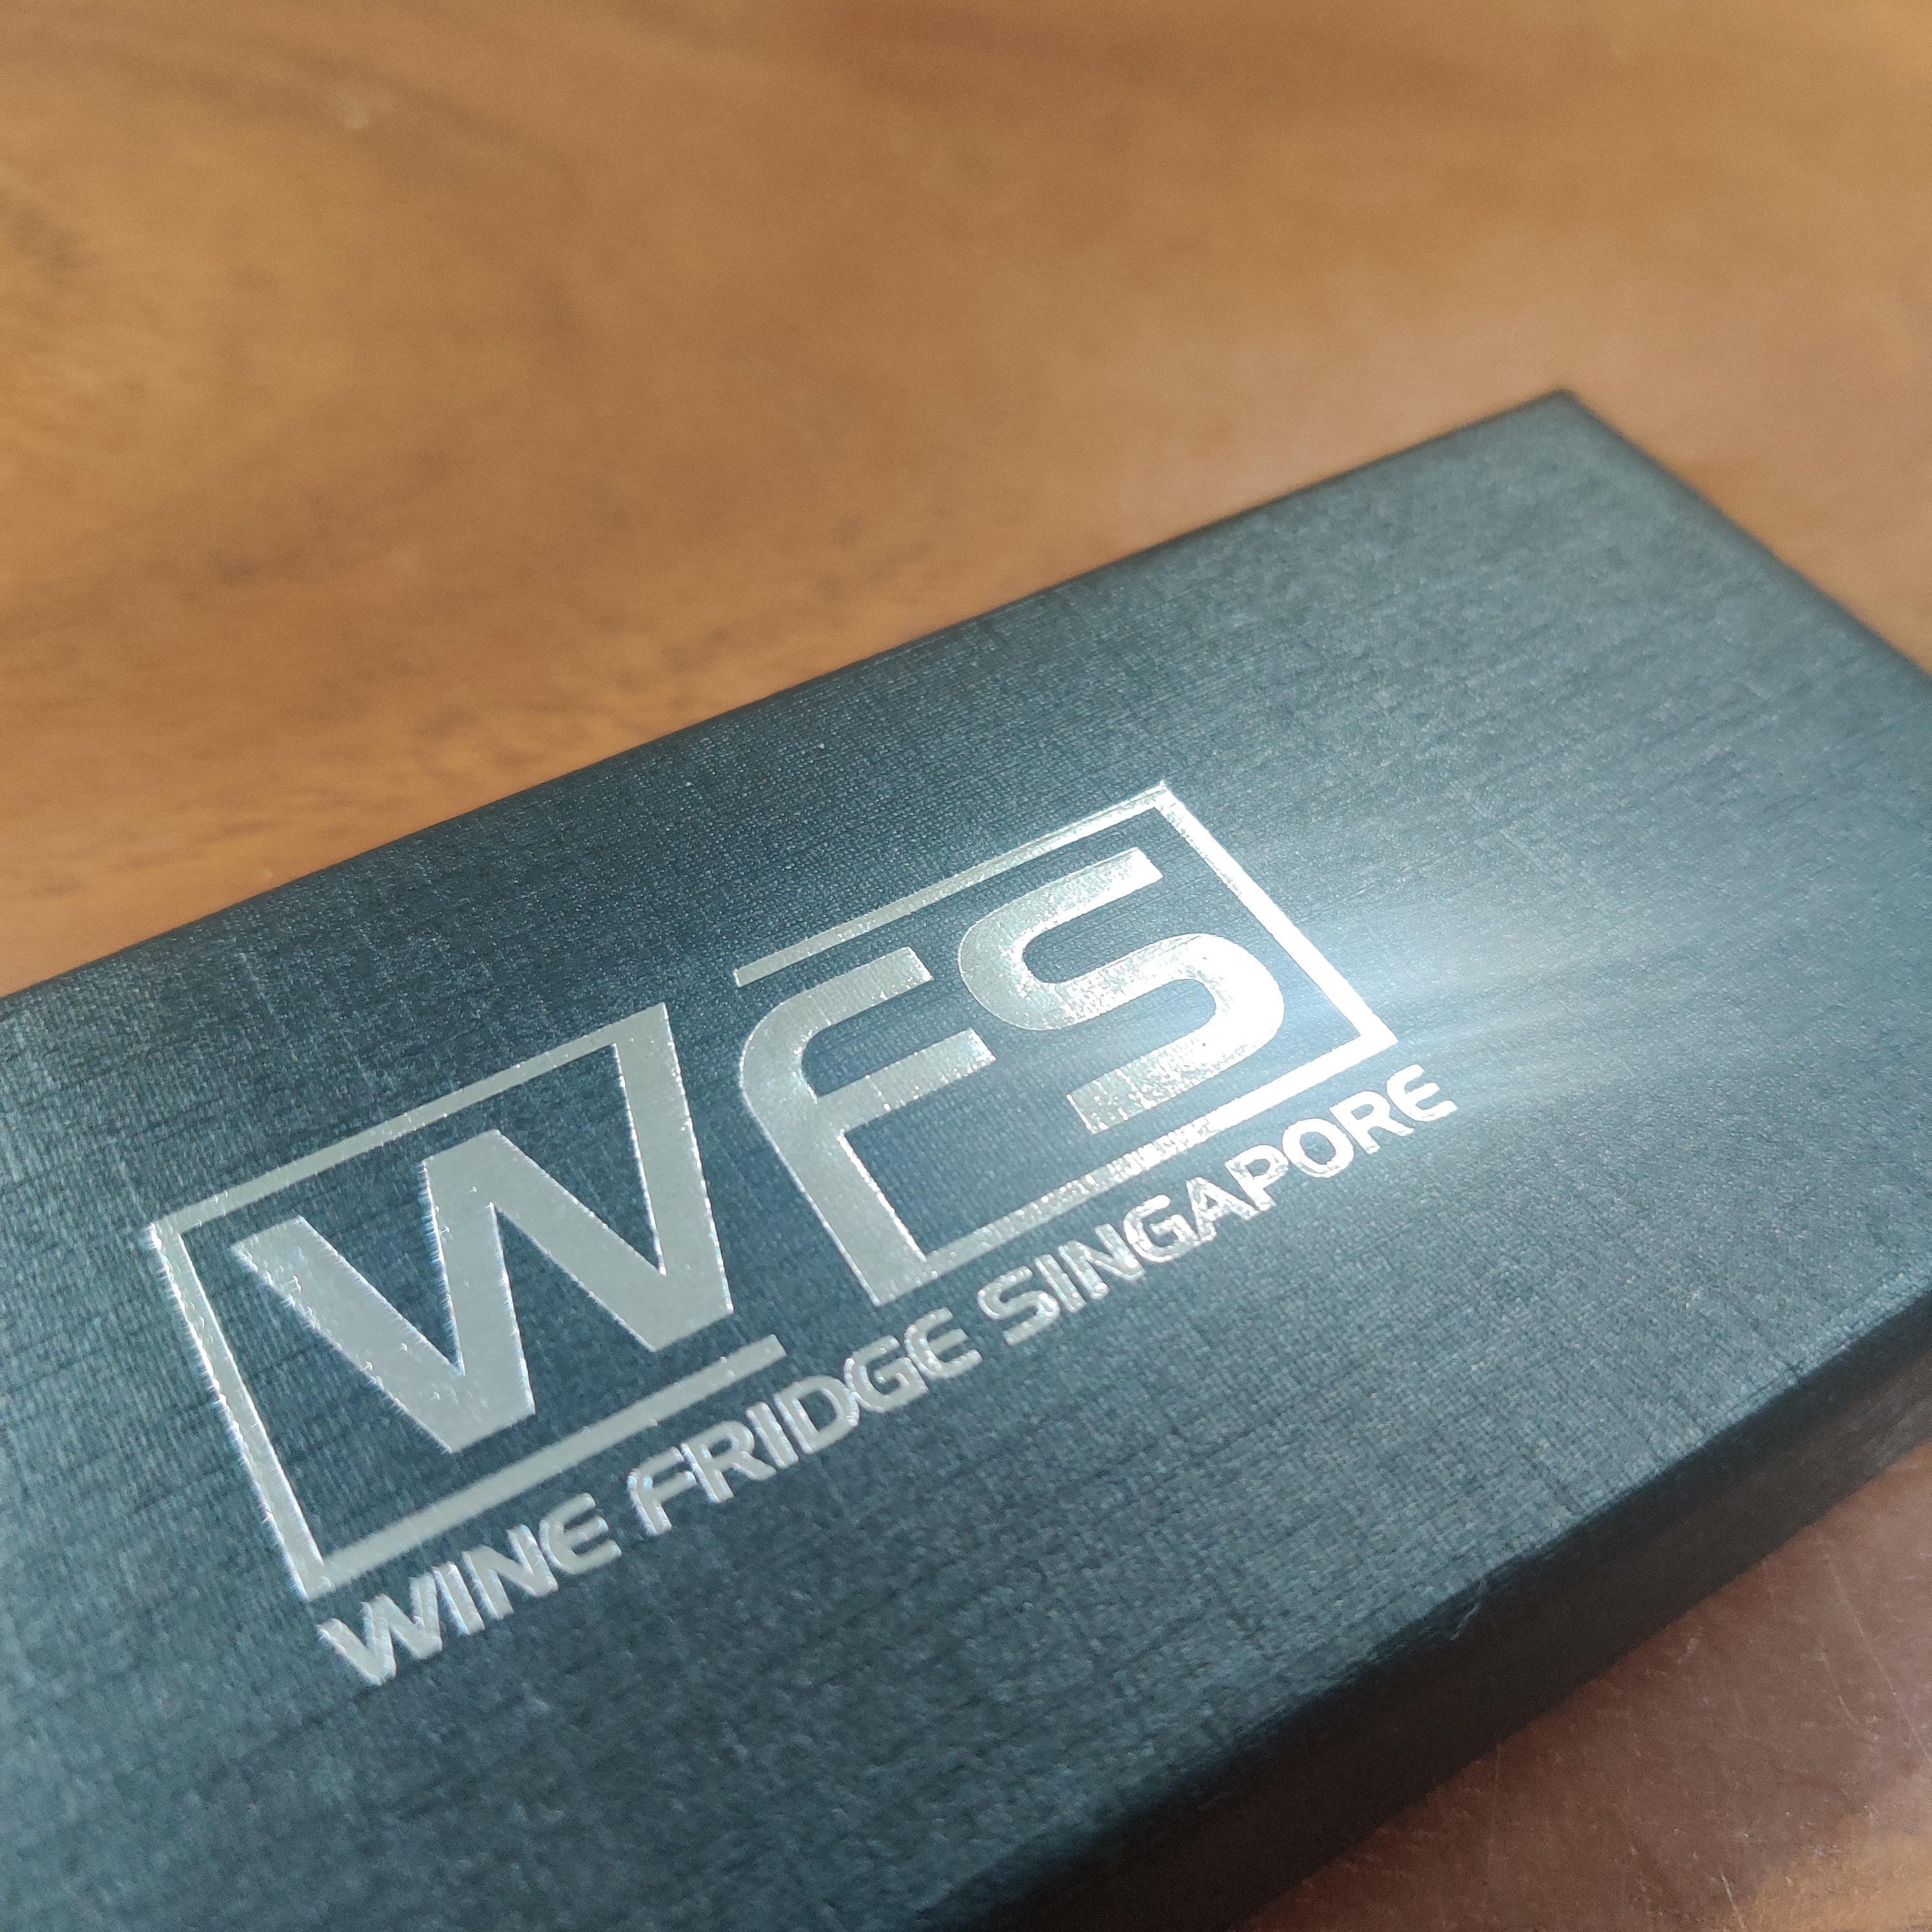 WFS Professional Waiter Corkscrew